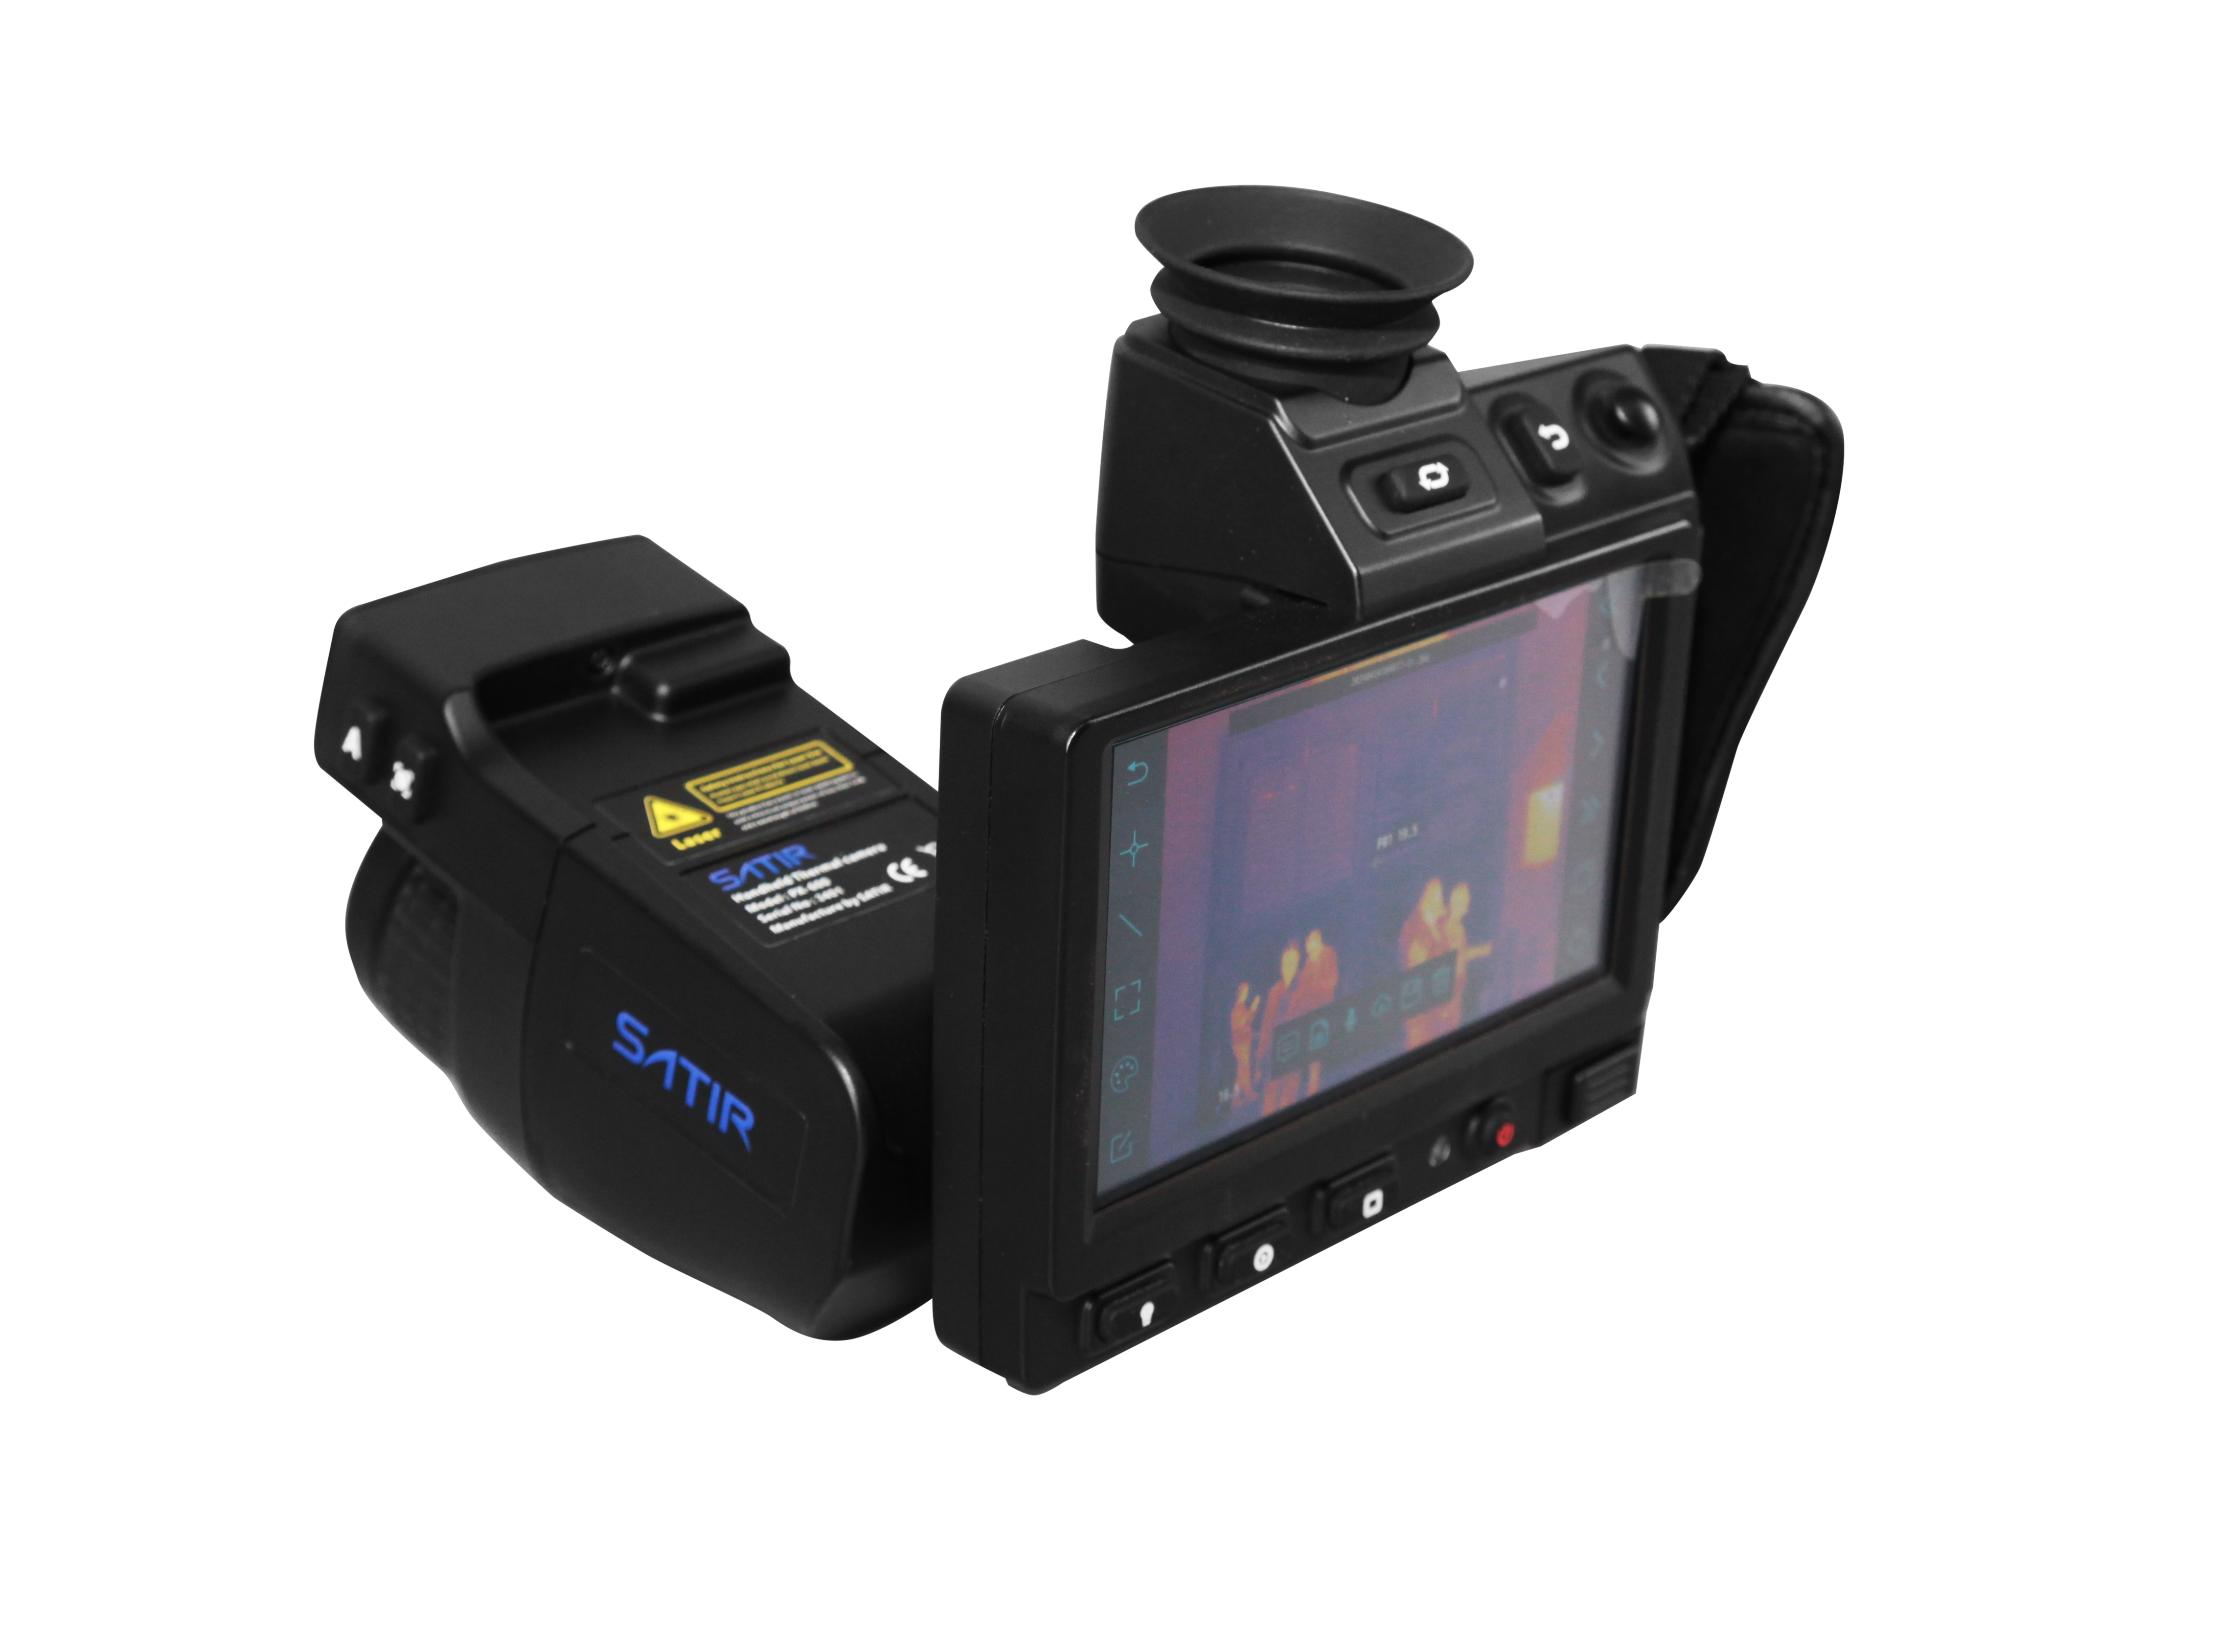 SATIR PX-100 | 1024x768 Thermal Camera | High Performance 